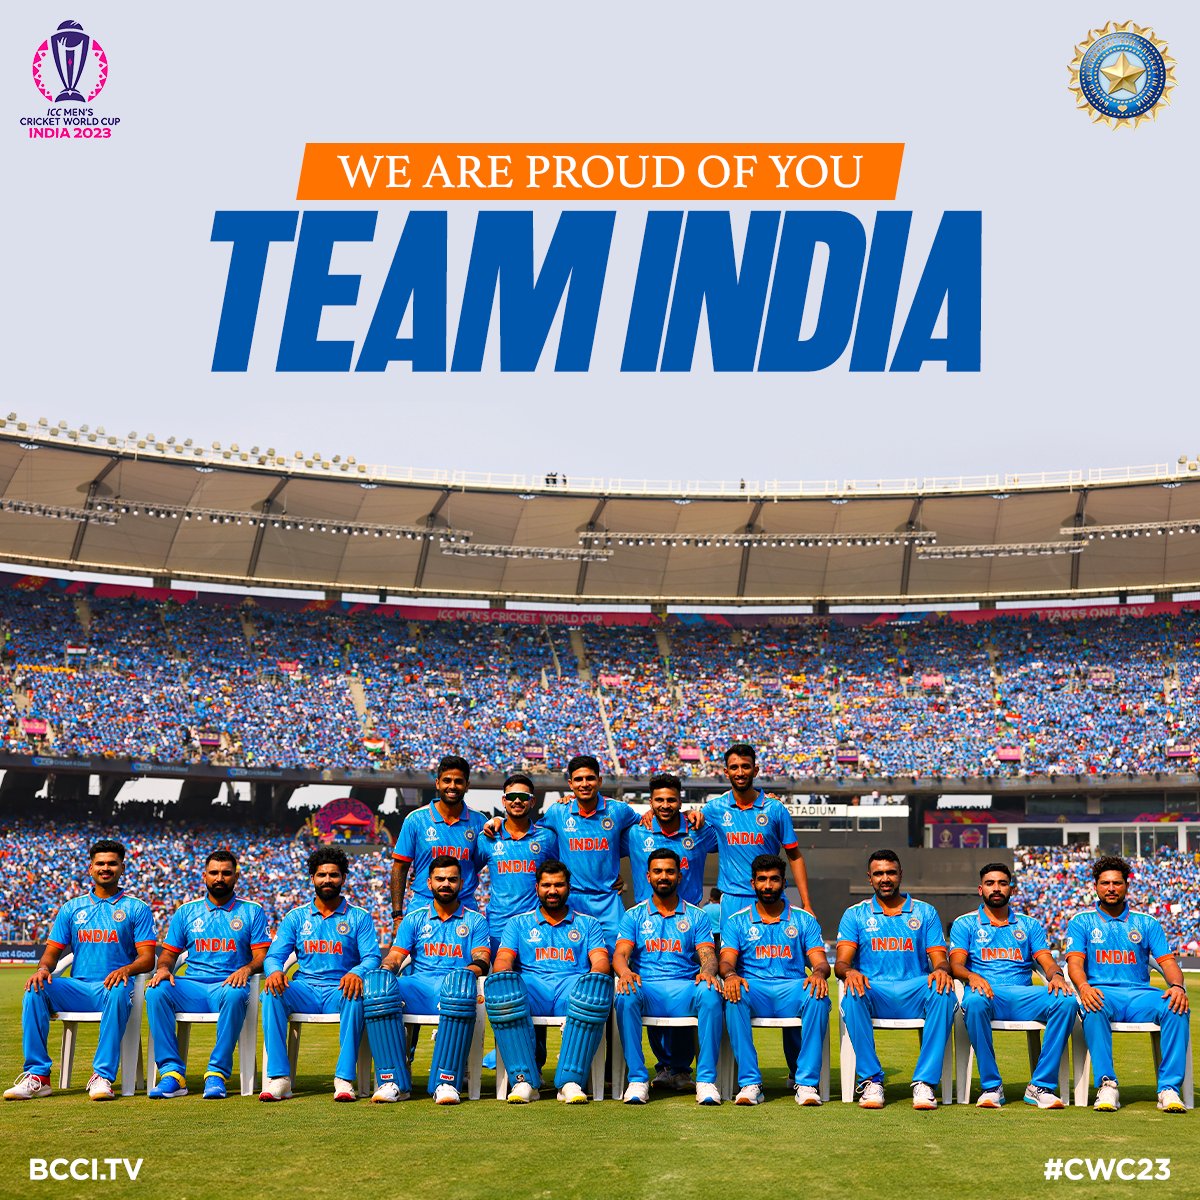 #INDvsAUSfinal #TeamIndia #CWC23Final #CWC2023 #CWC23 #CWC23INDIA #Indian #RohitSharma𓃵 #ViratKohli #Tweet #photography #picoftheday #instagram